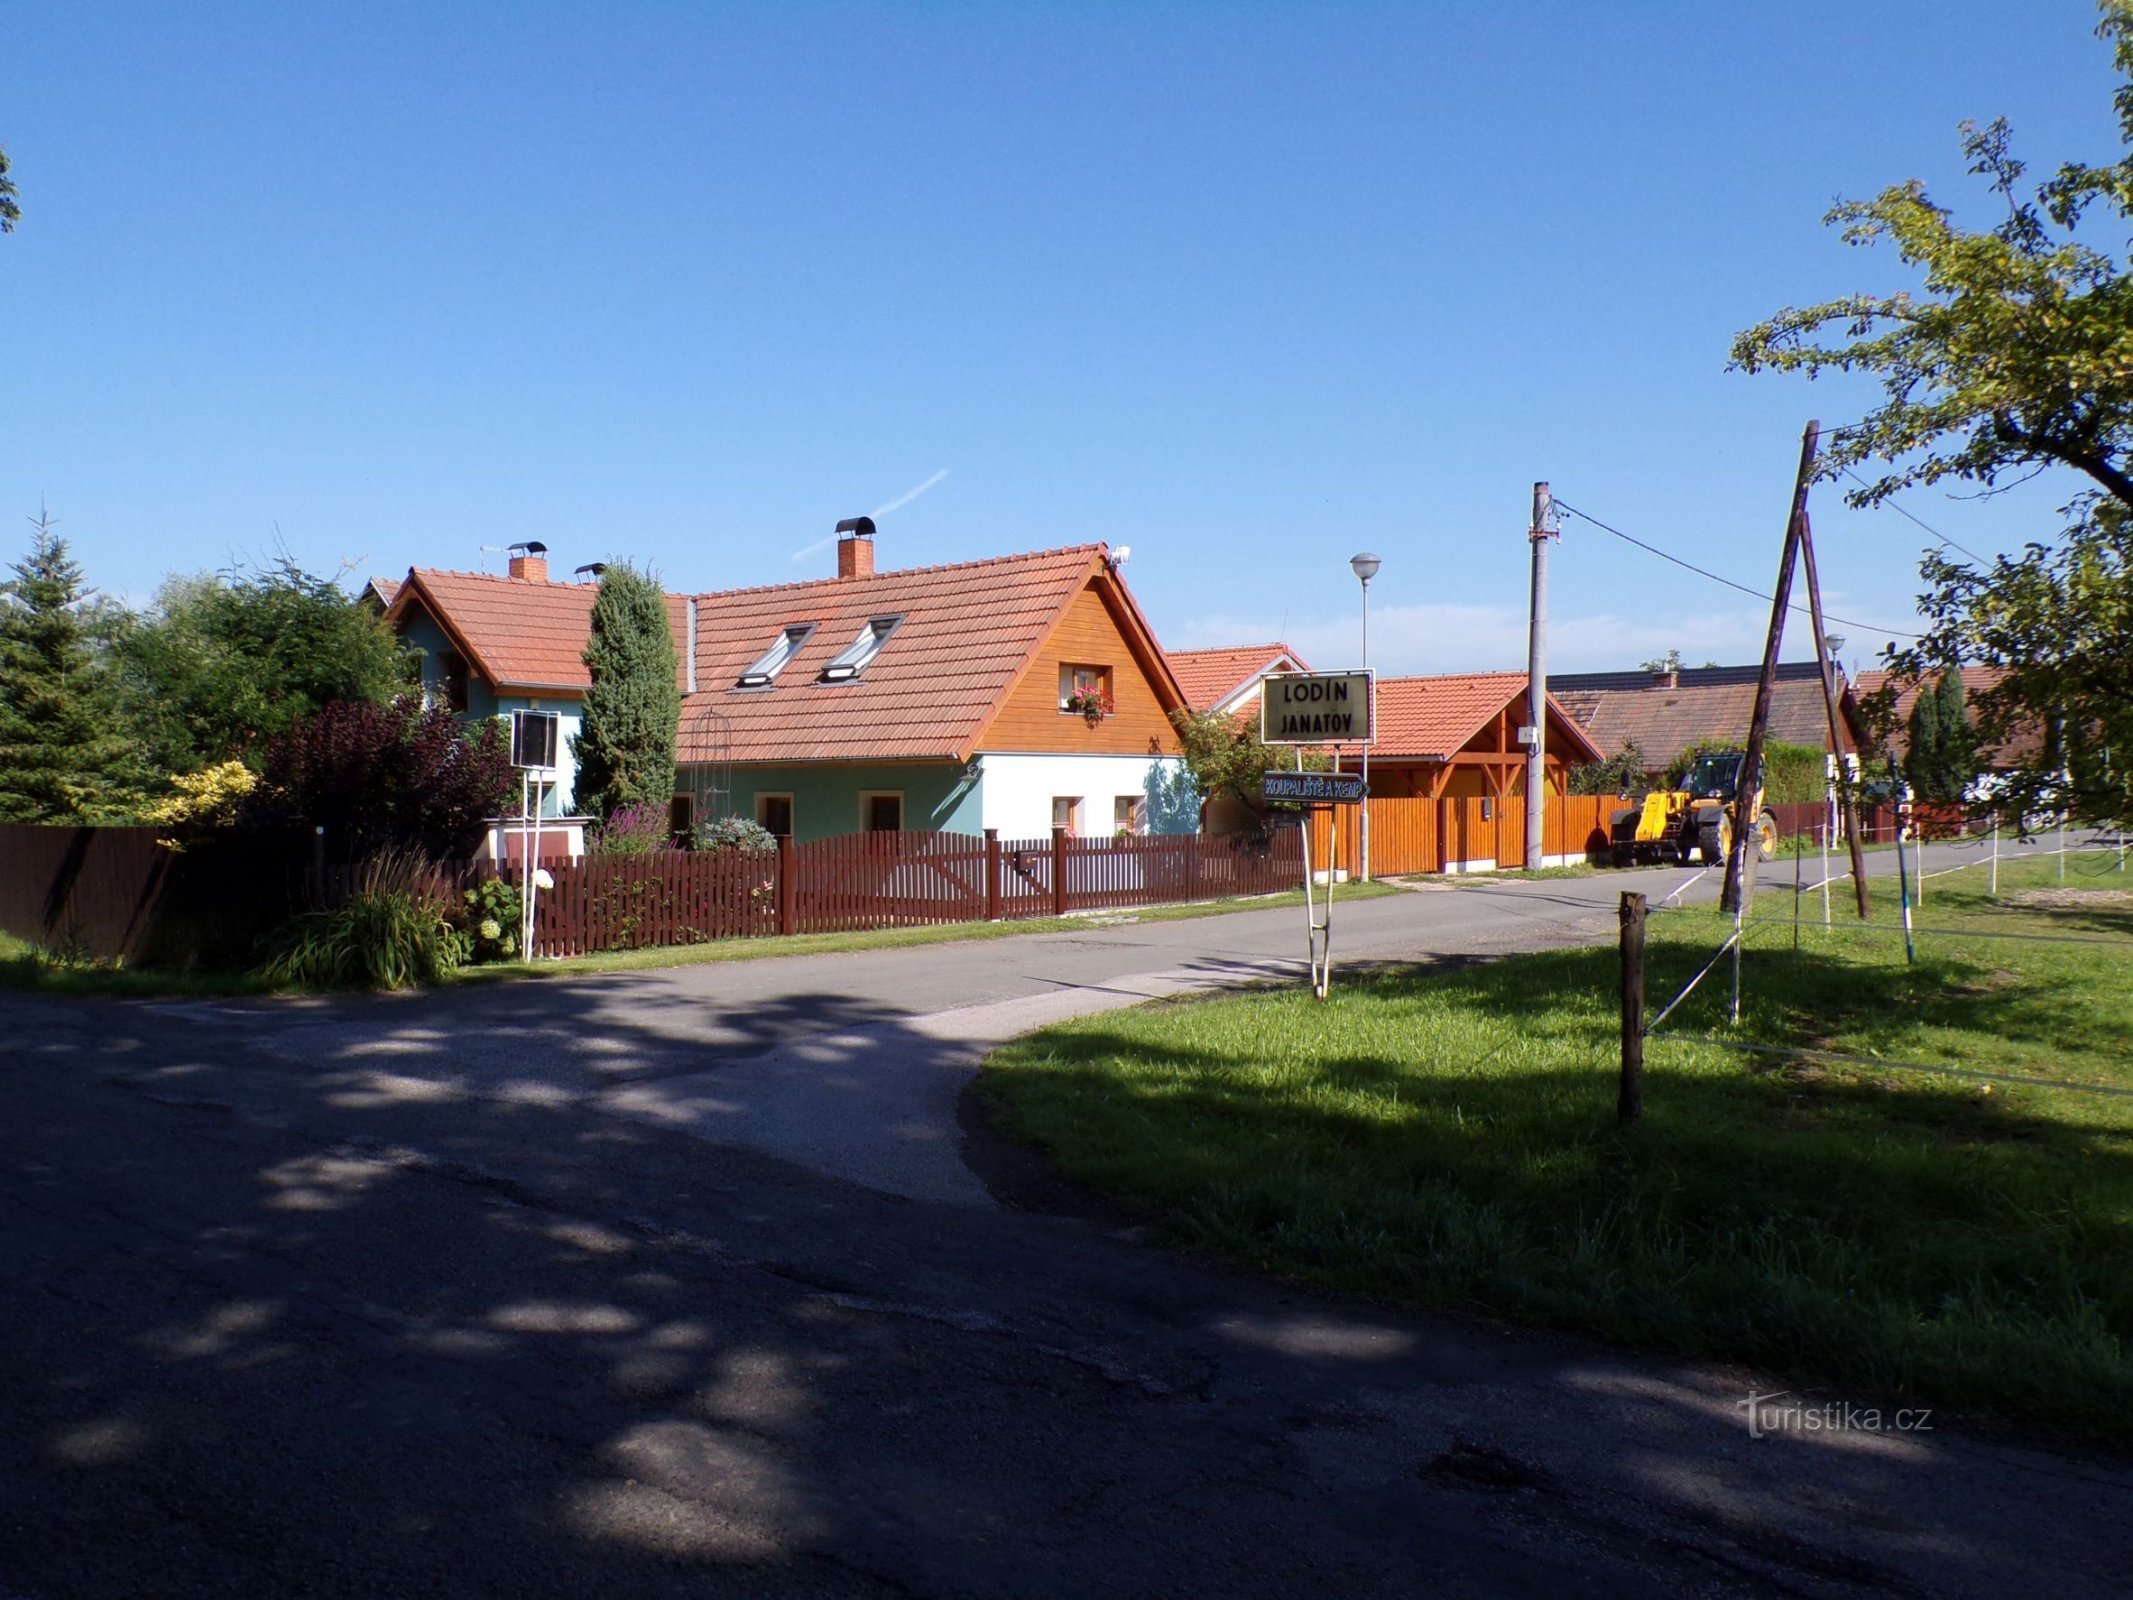 Vista de Janatov desde la carretera principal (15.8.2021/XNUMX/XNUMX)